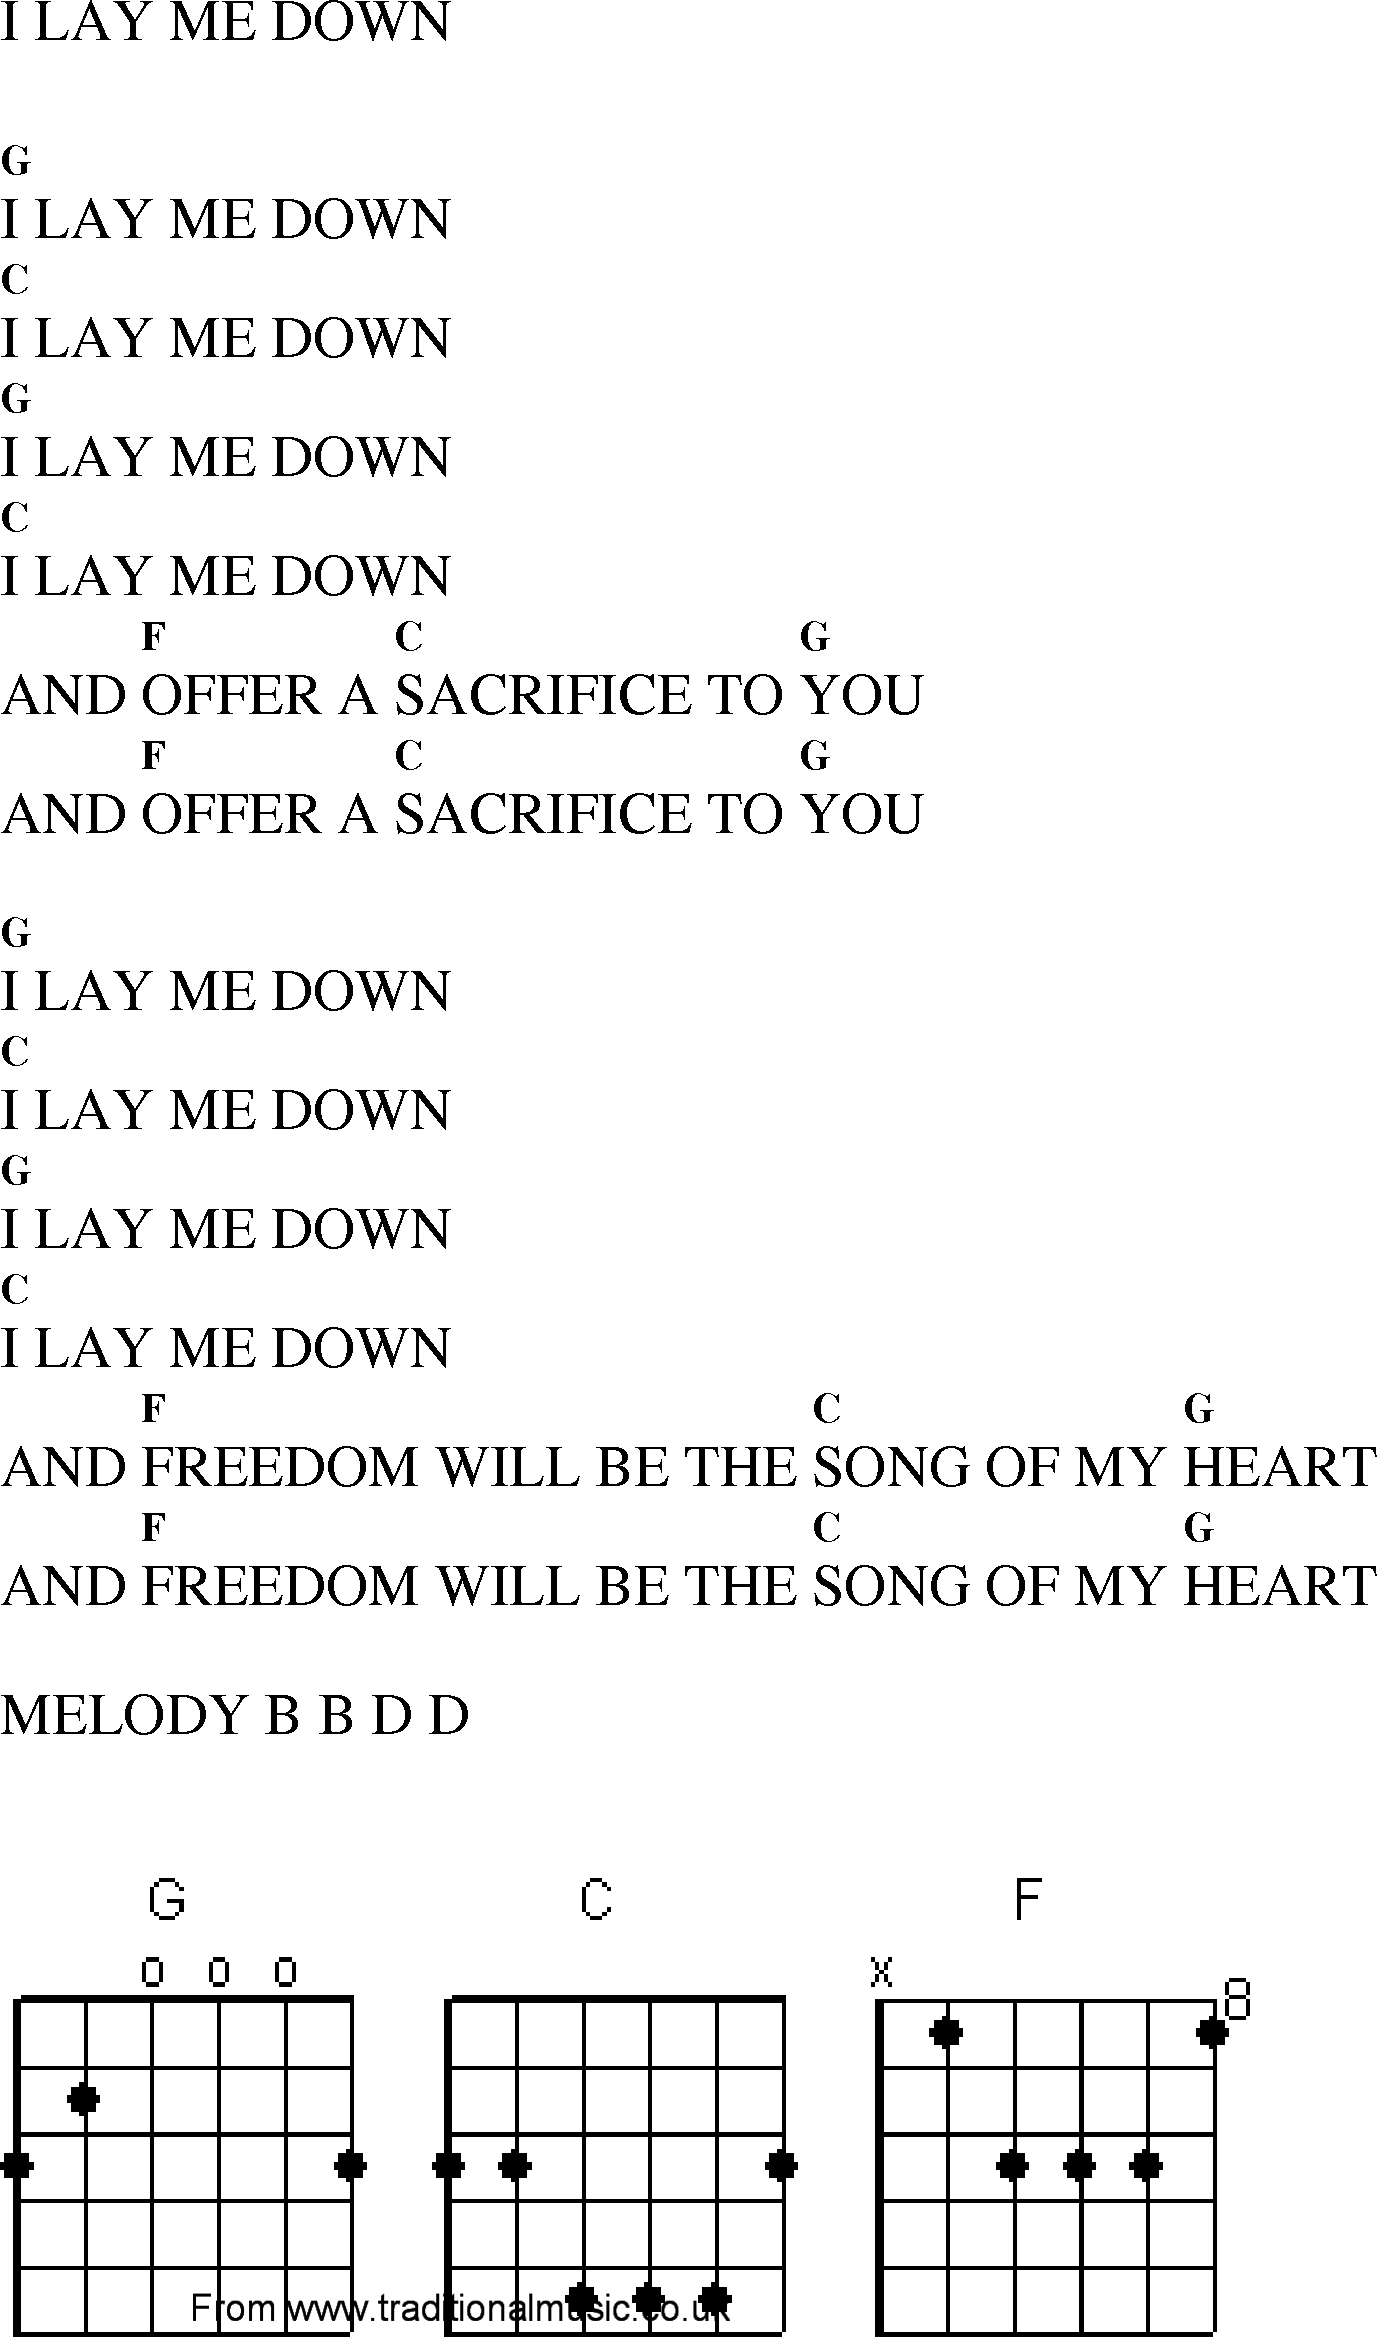 Gospel Song: i_lay_me_down, lyrics and chords.